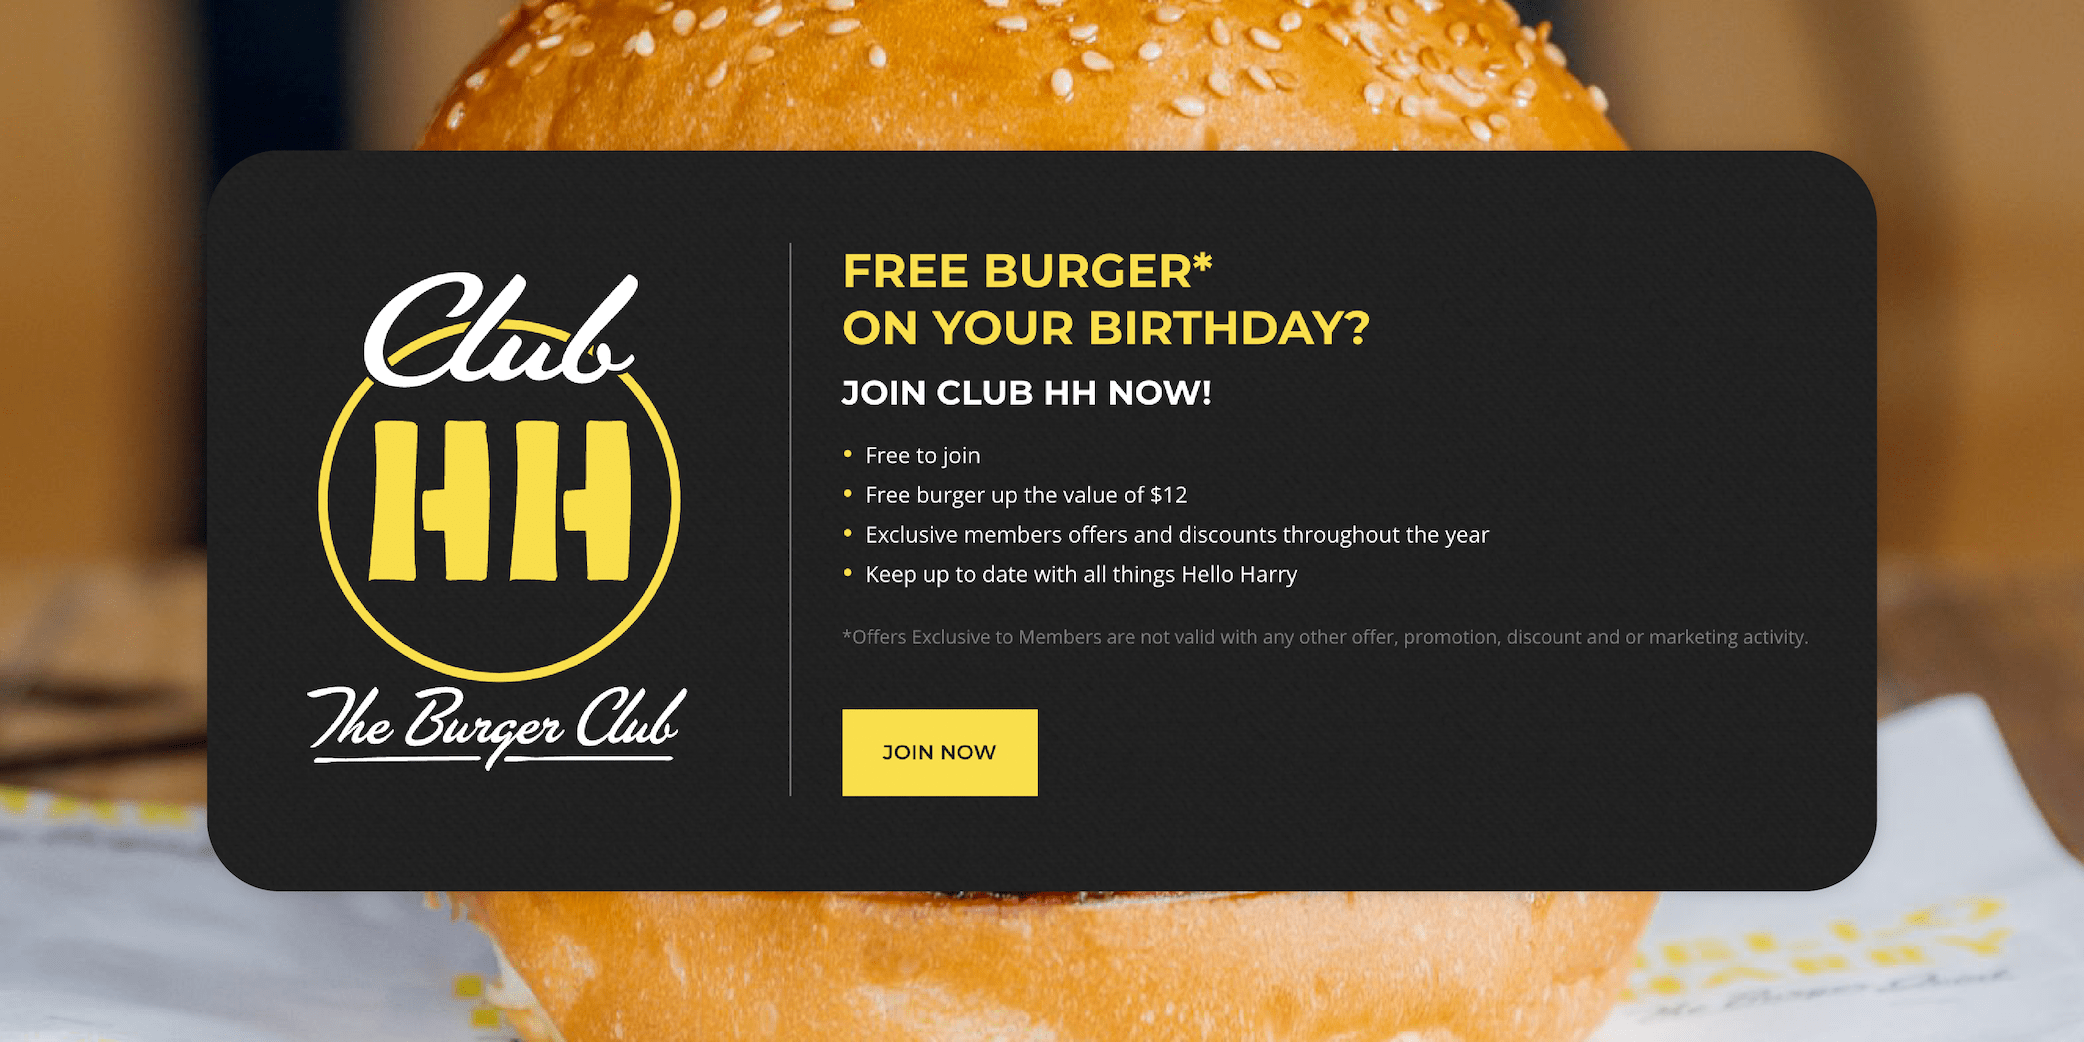 Hello Harrys free burger birthday offer website banner